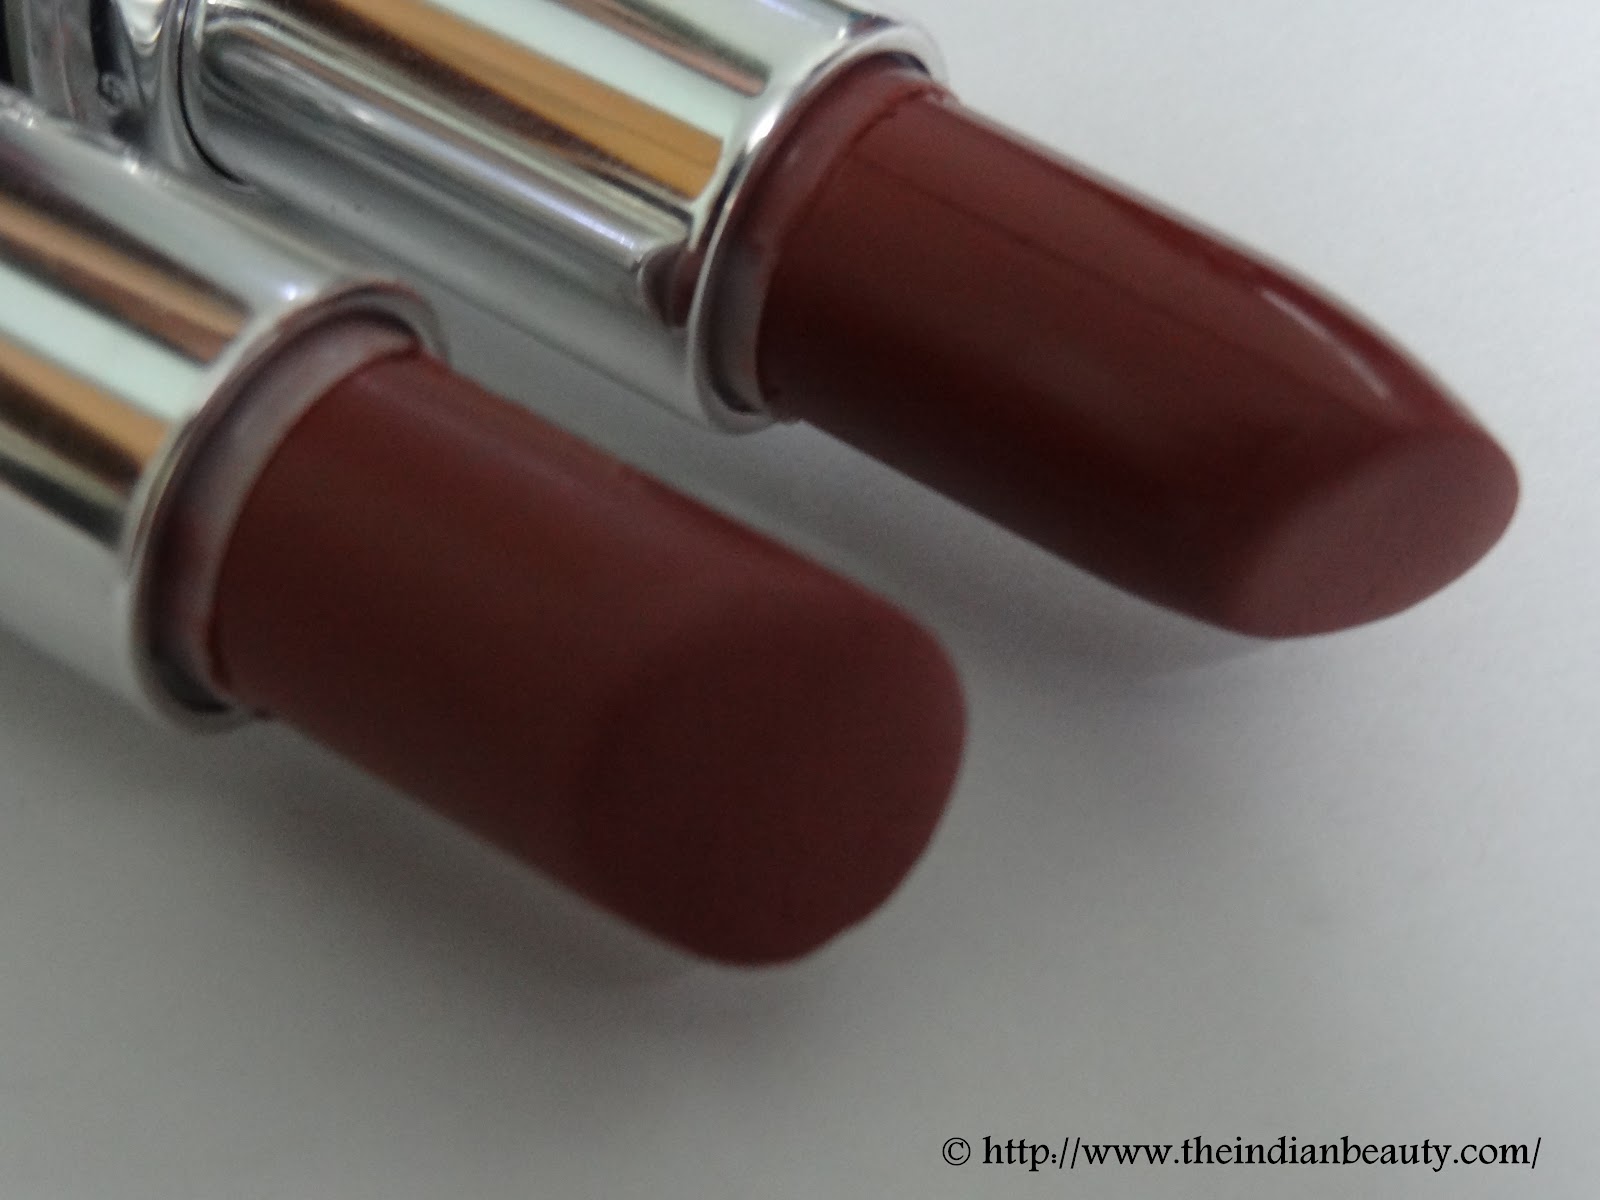 2 Chambor Powder Matte Brique Rose lipsticks, and the